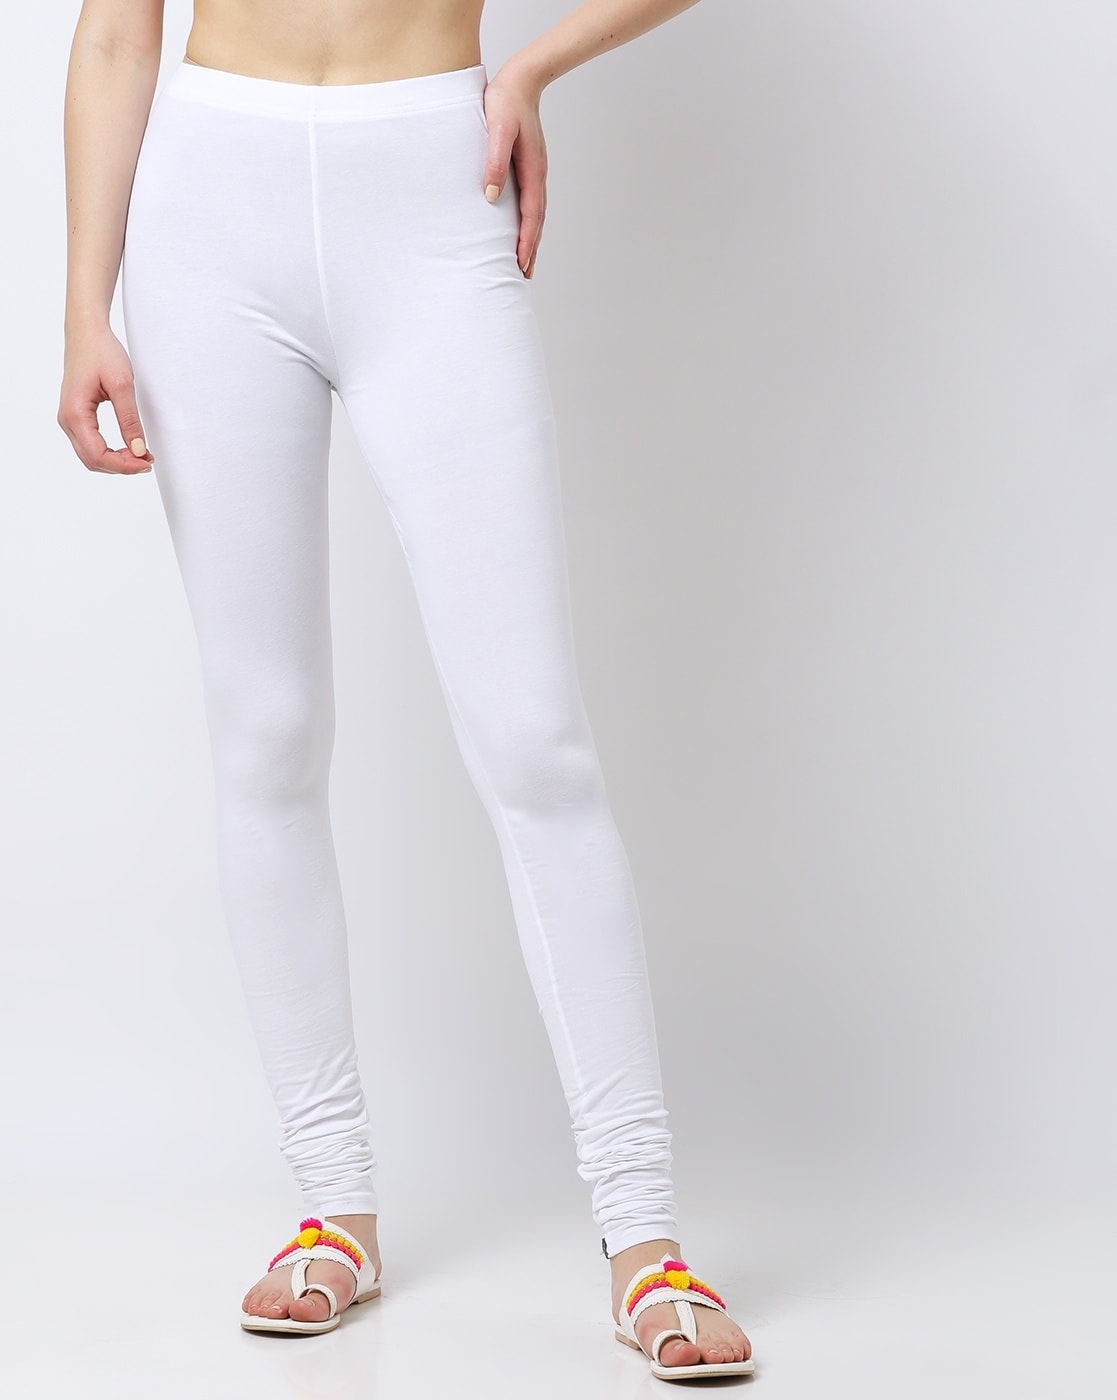 Active Wear | Avaasa Full Length Leggings Only XL Size Combo | Freeup-thanhphatduhoc.com.vn